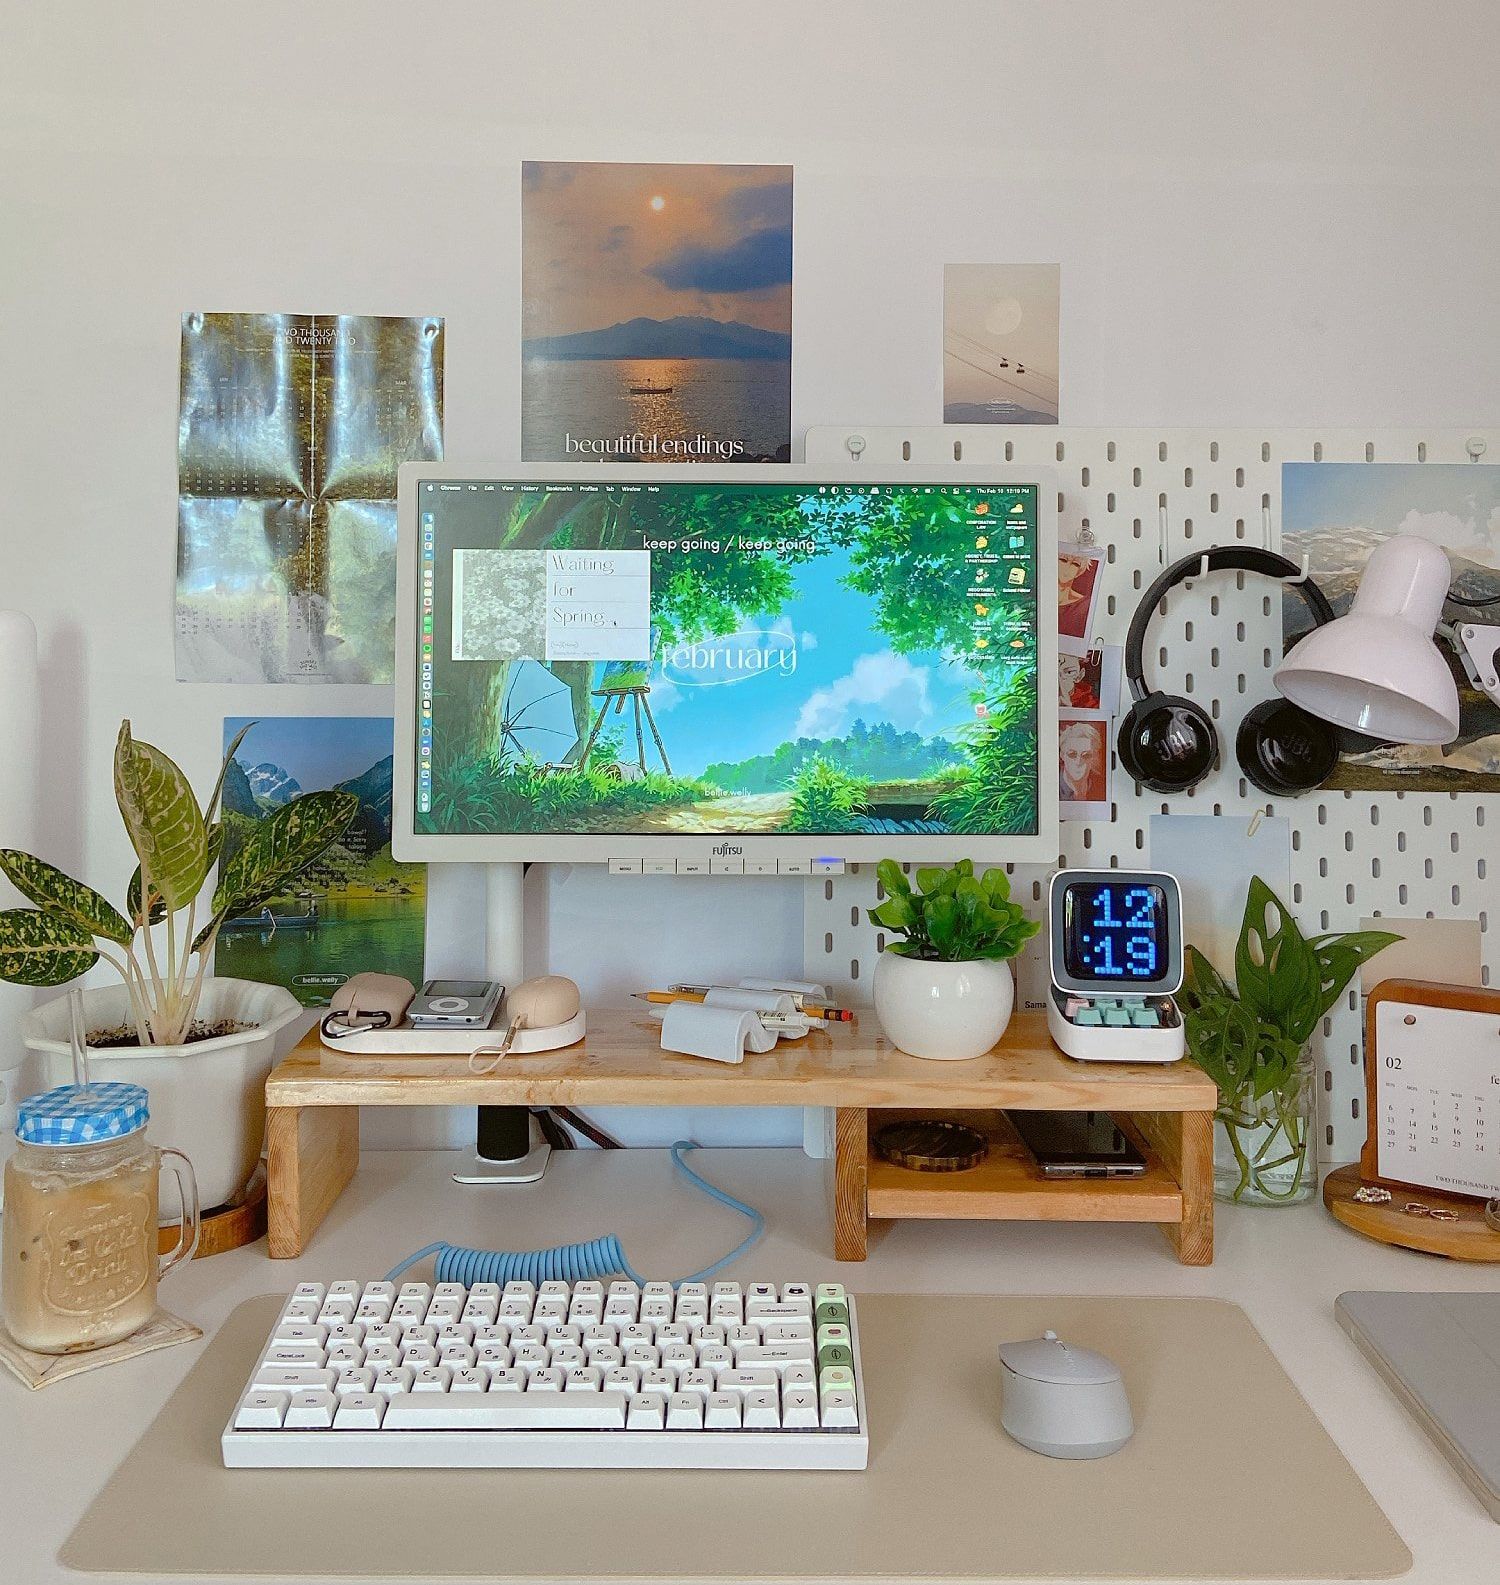 A cute study desk setup featuring a mechanical keyboard